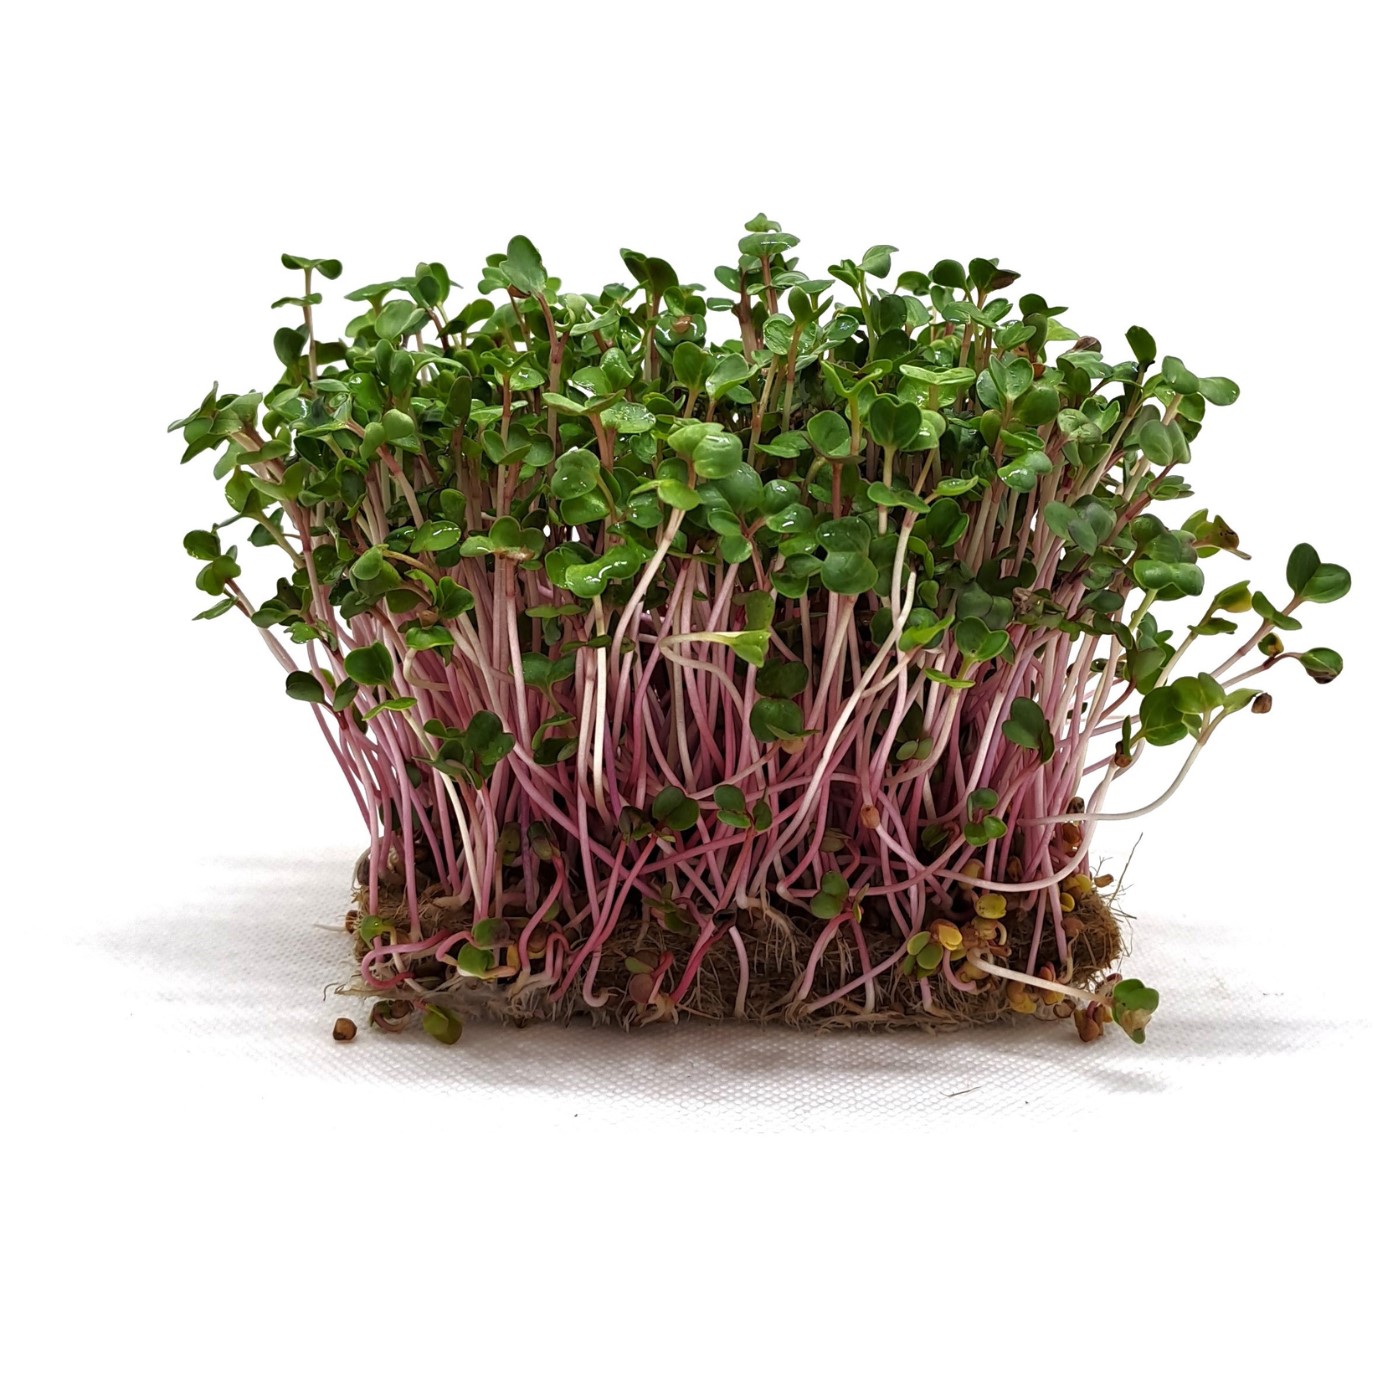 Organic radish for microgreens